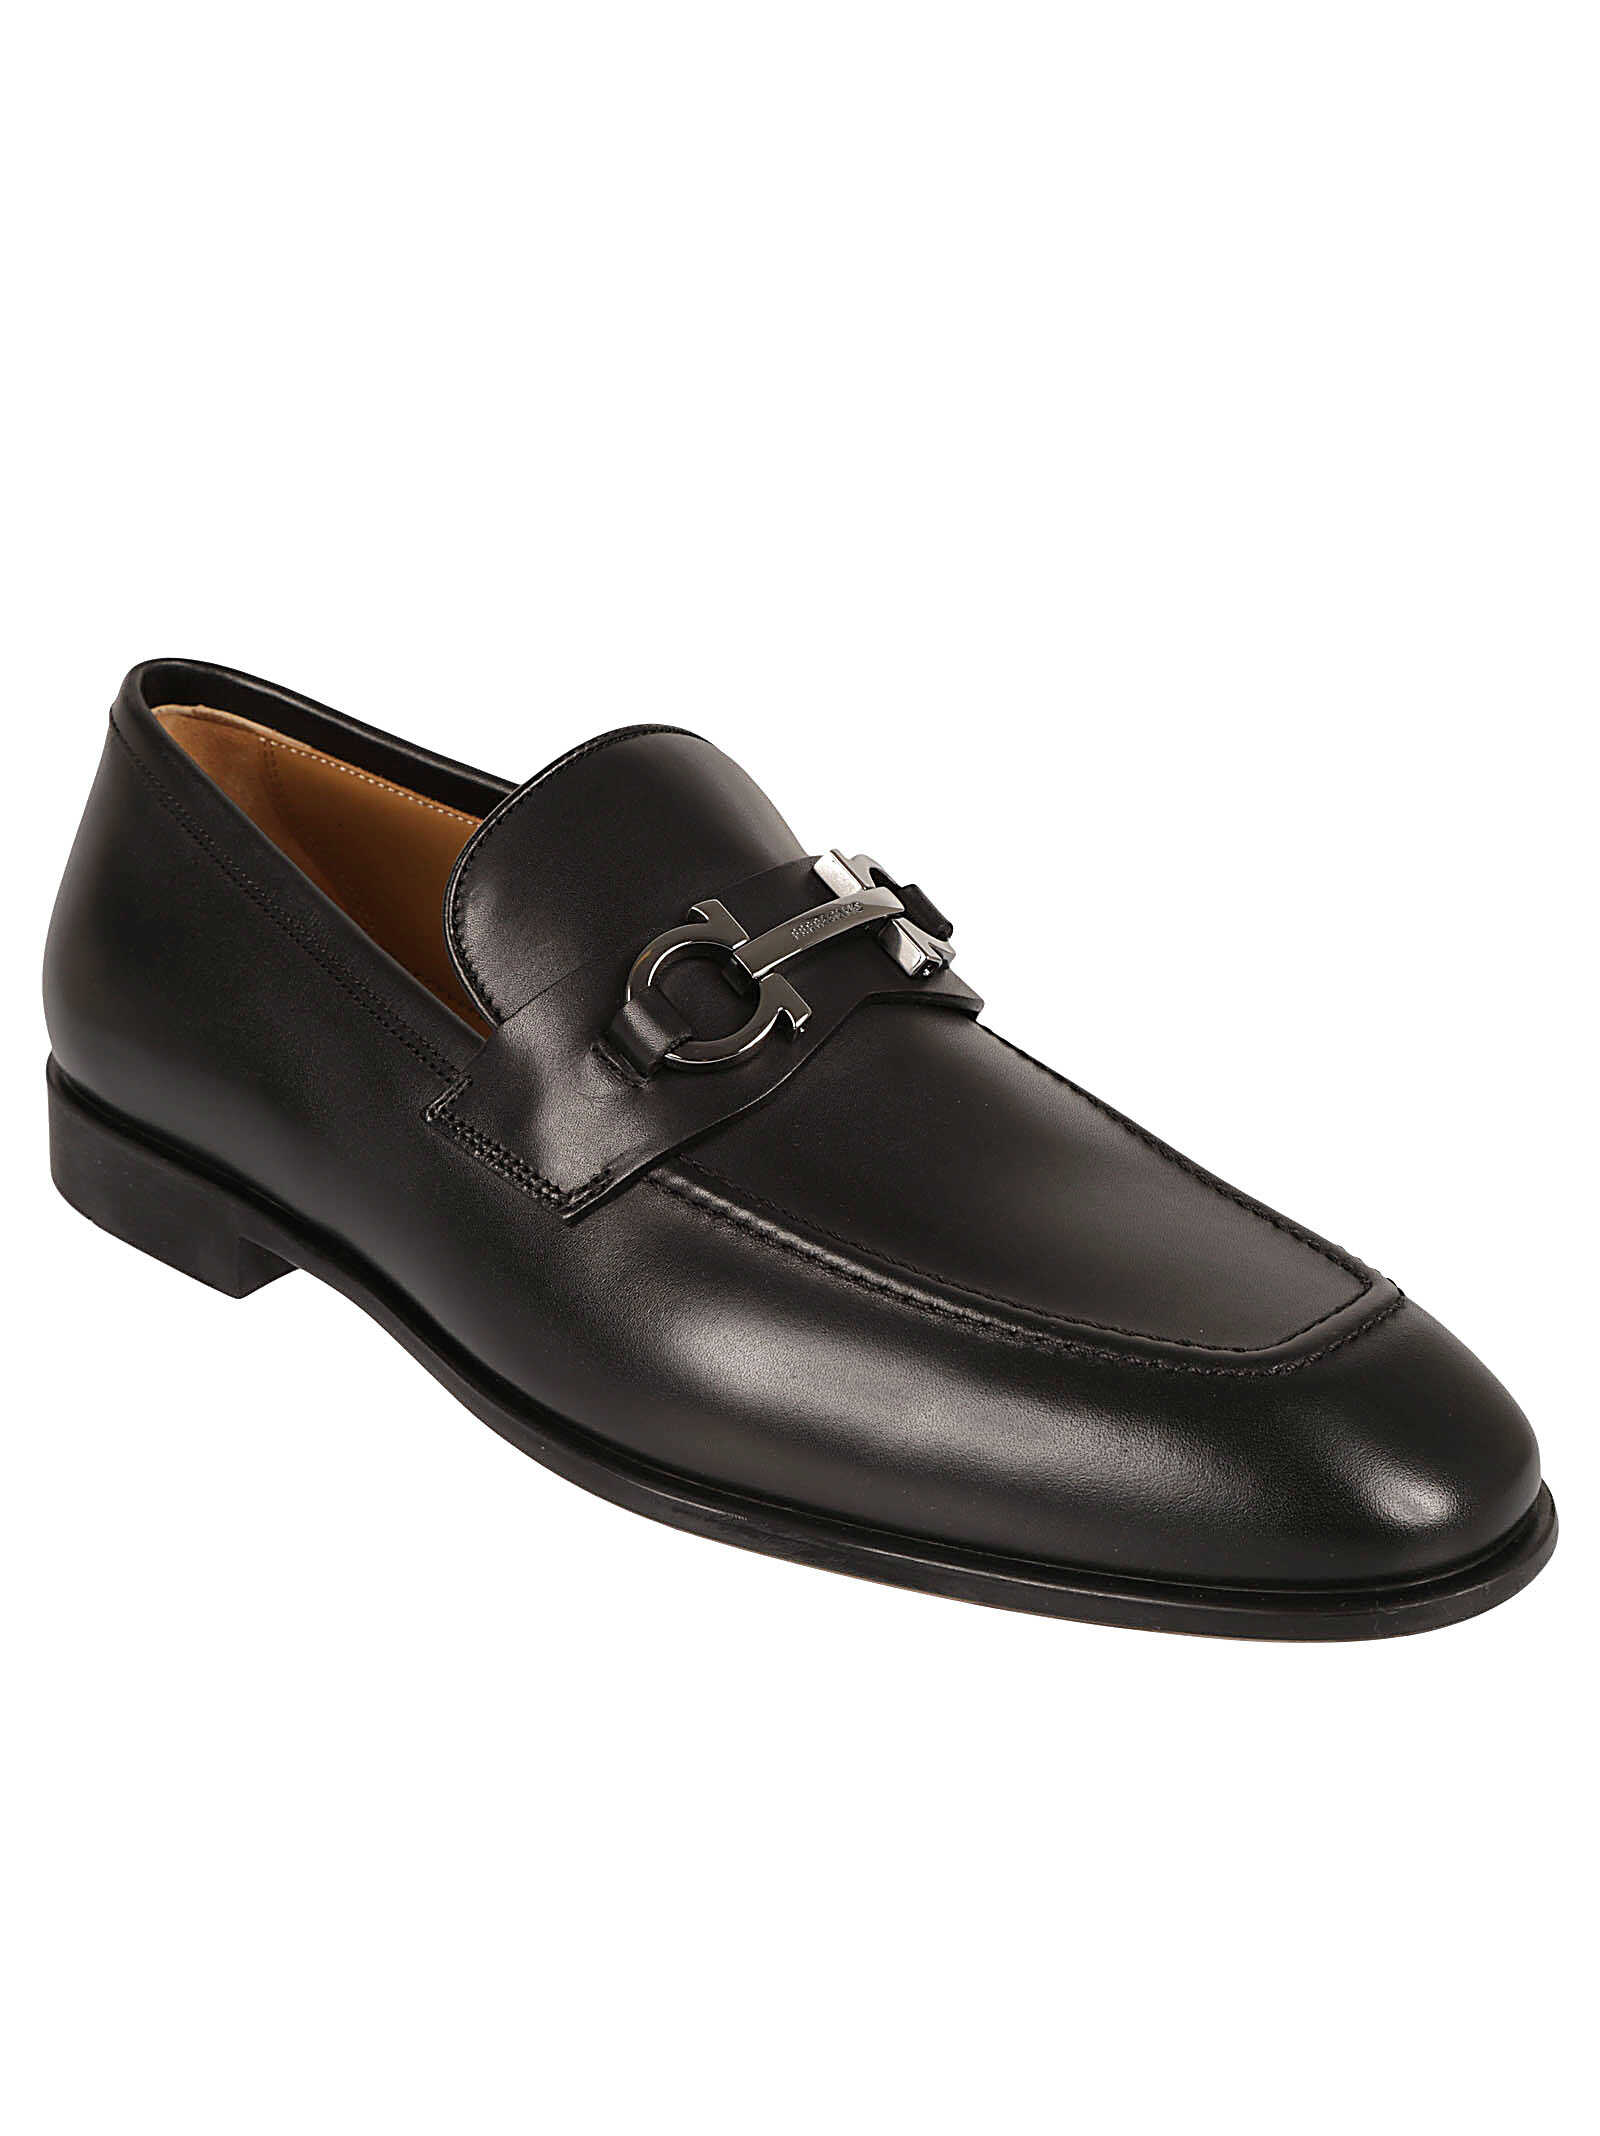 Salvatore Ferragamo Flat Shoes Black